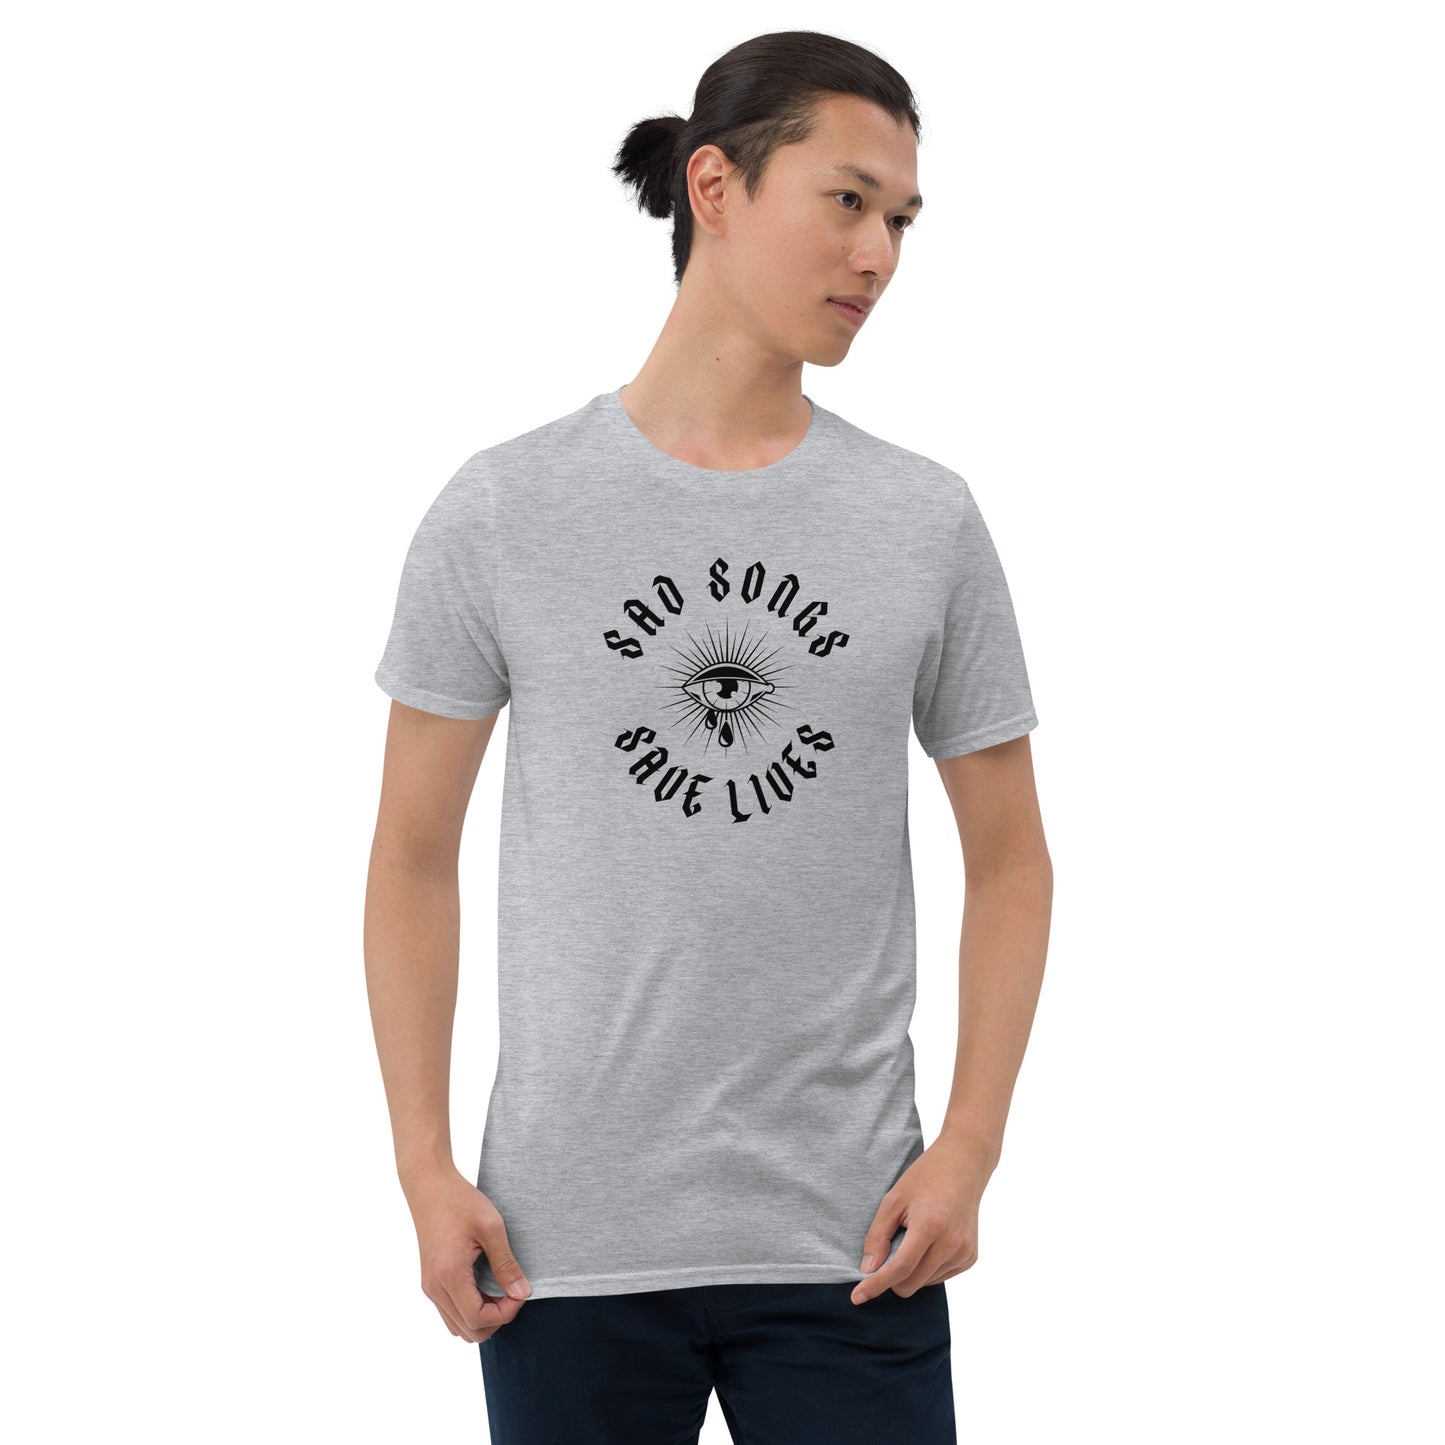 "Sad Songs Save Lives" Short-Sleeve Unisex T-Shirt